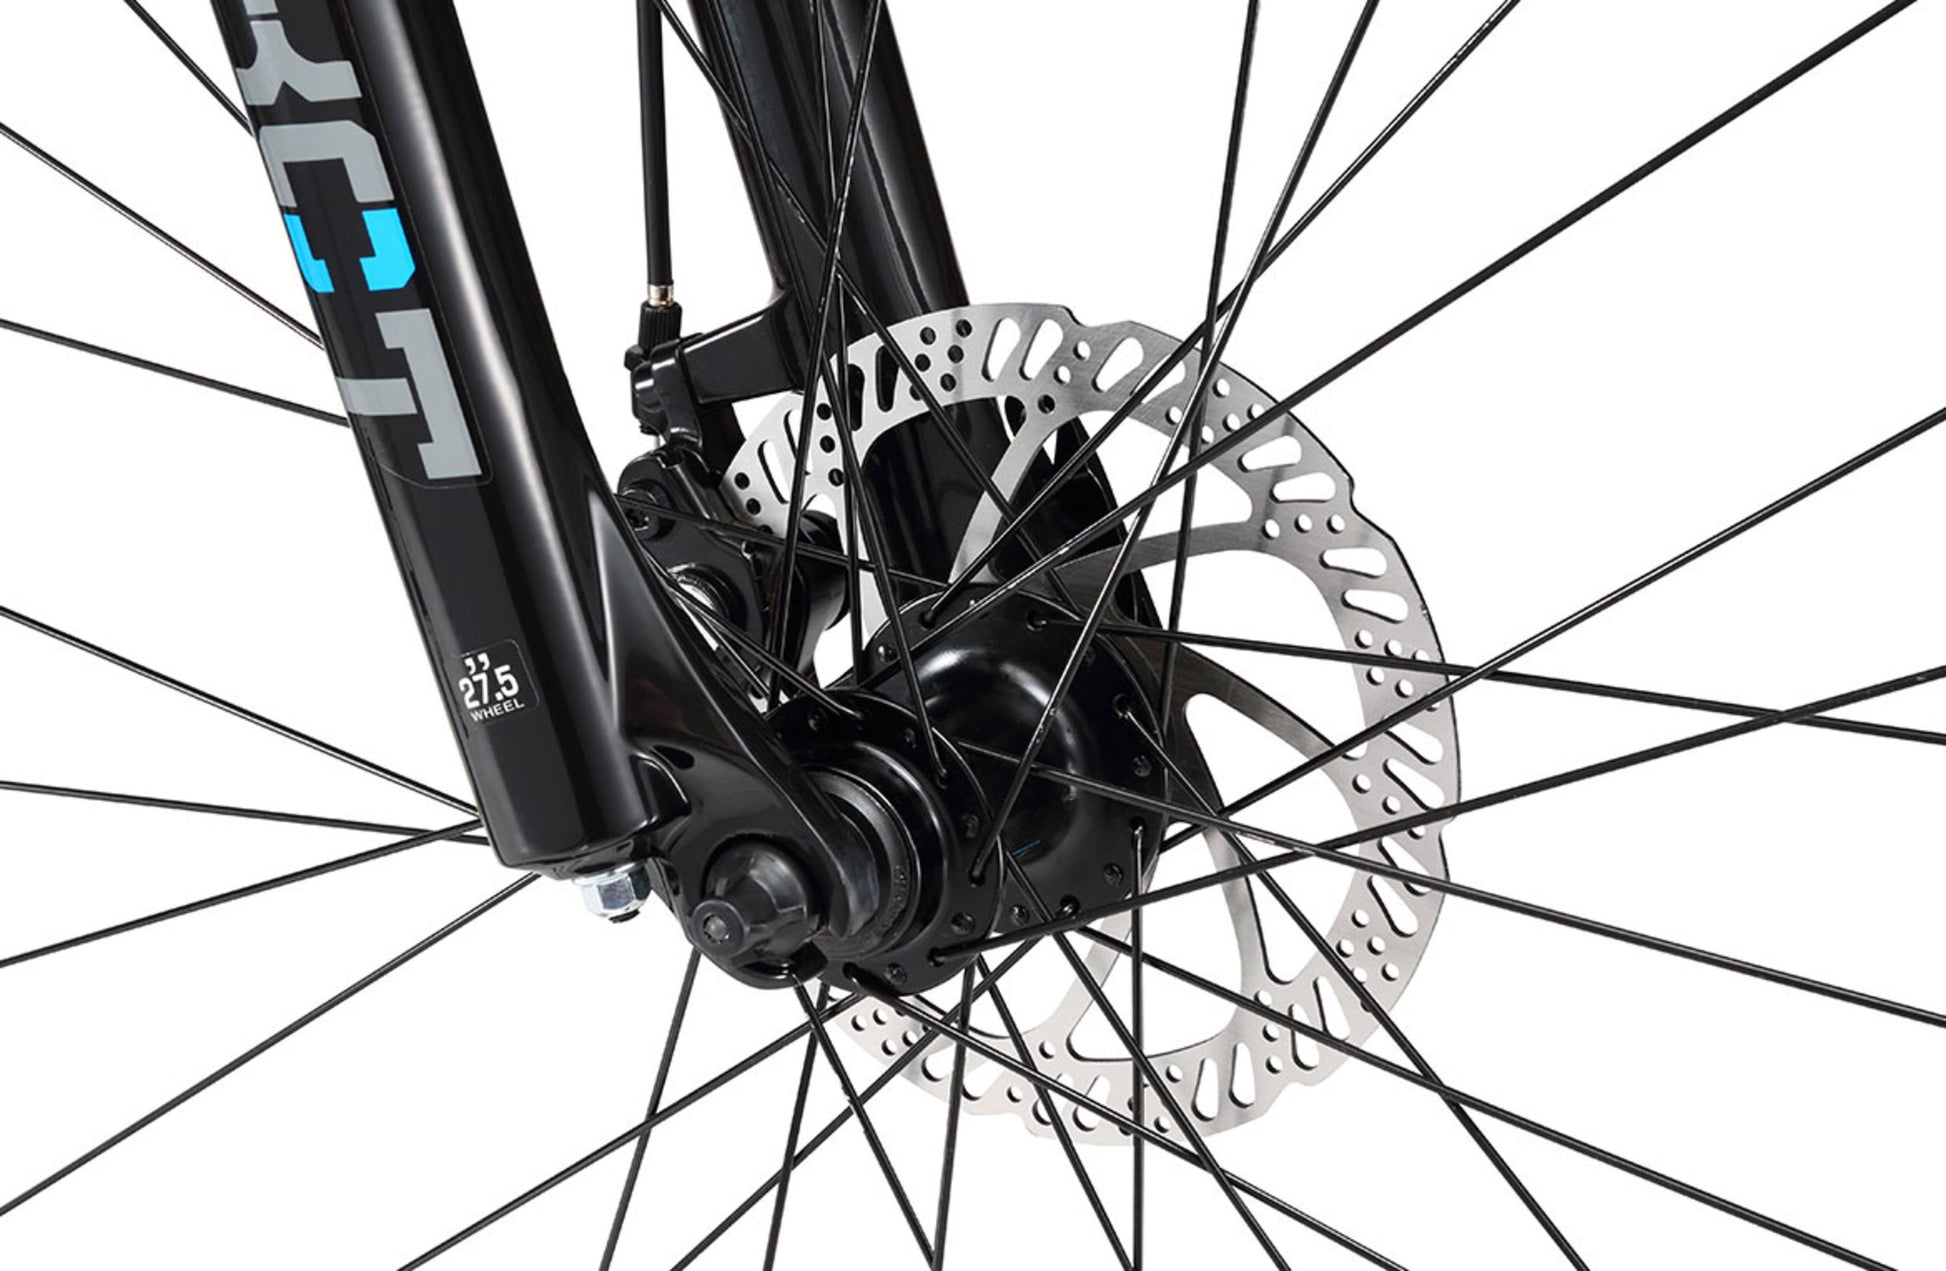 X-trail Mountain Bike in Gloss Black showing mechanical disc brake from Reid Cycles Australia